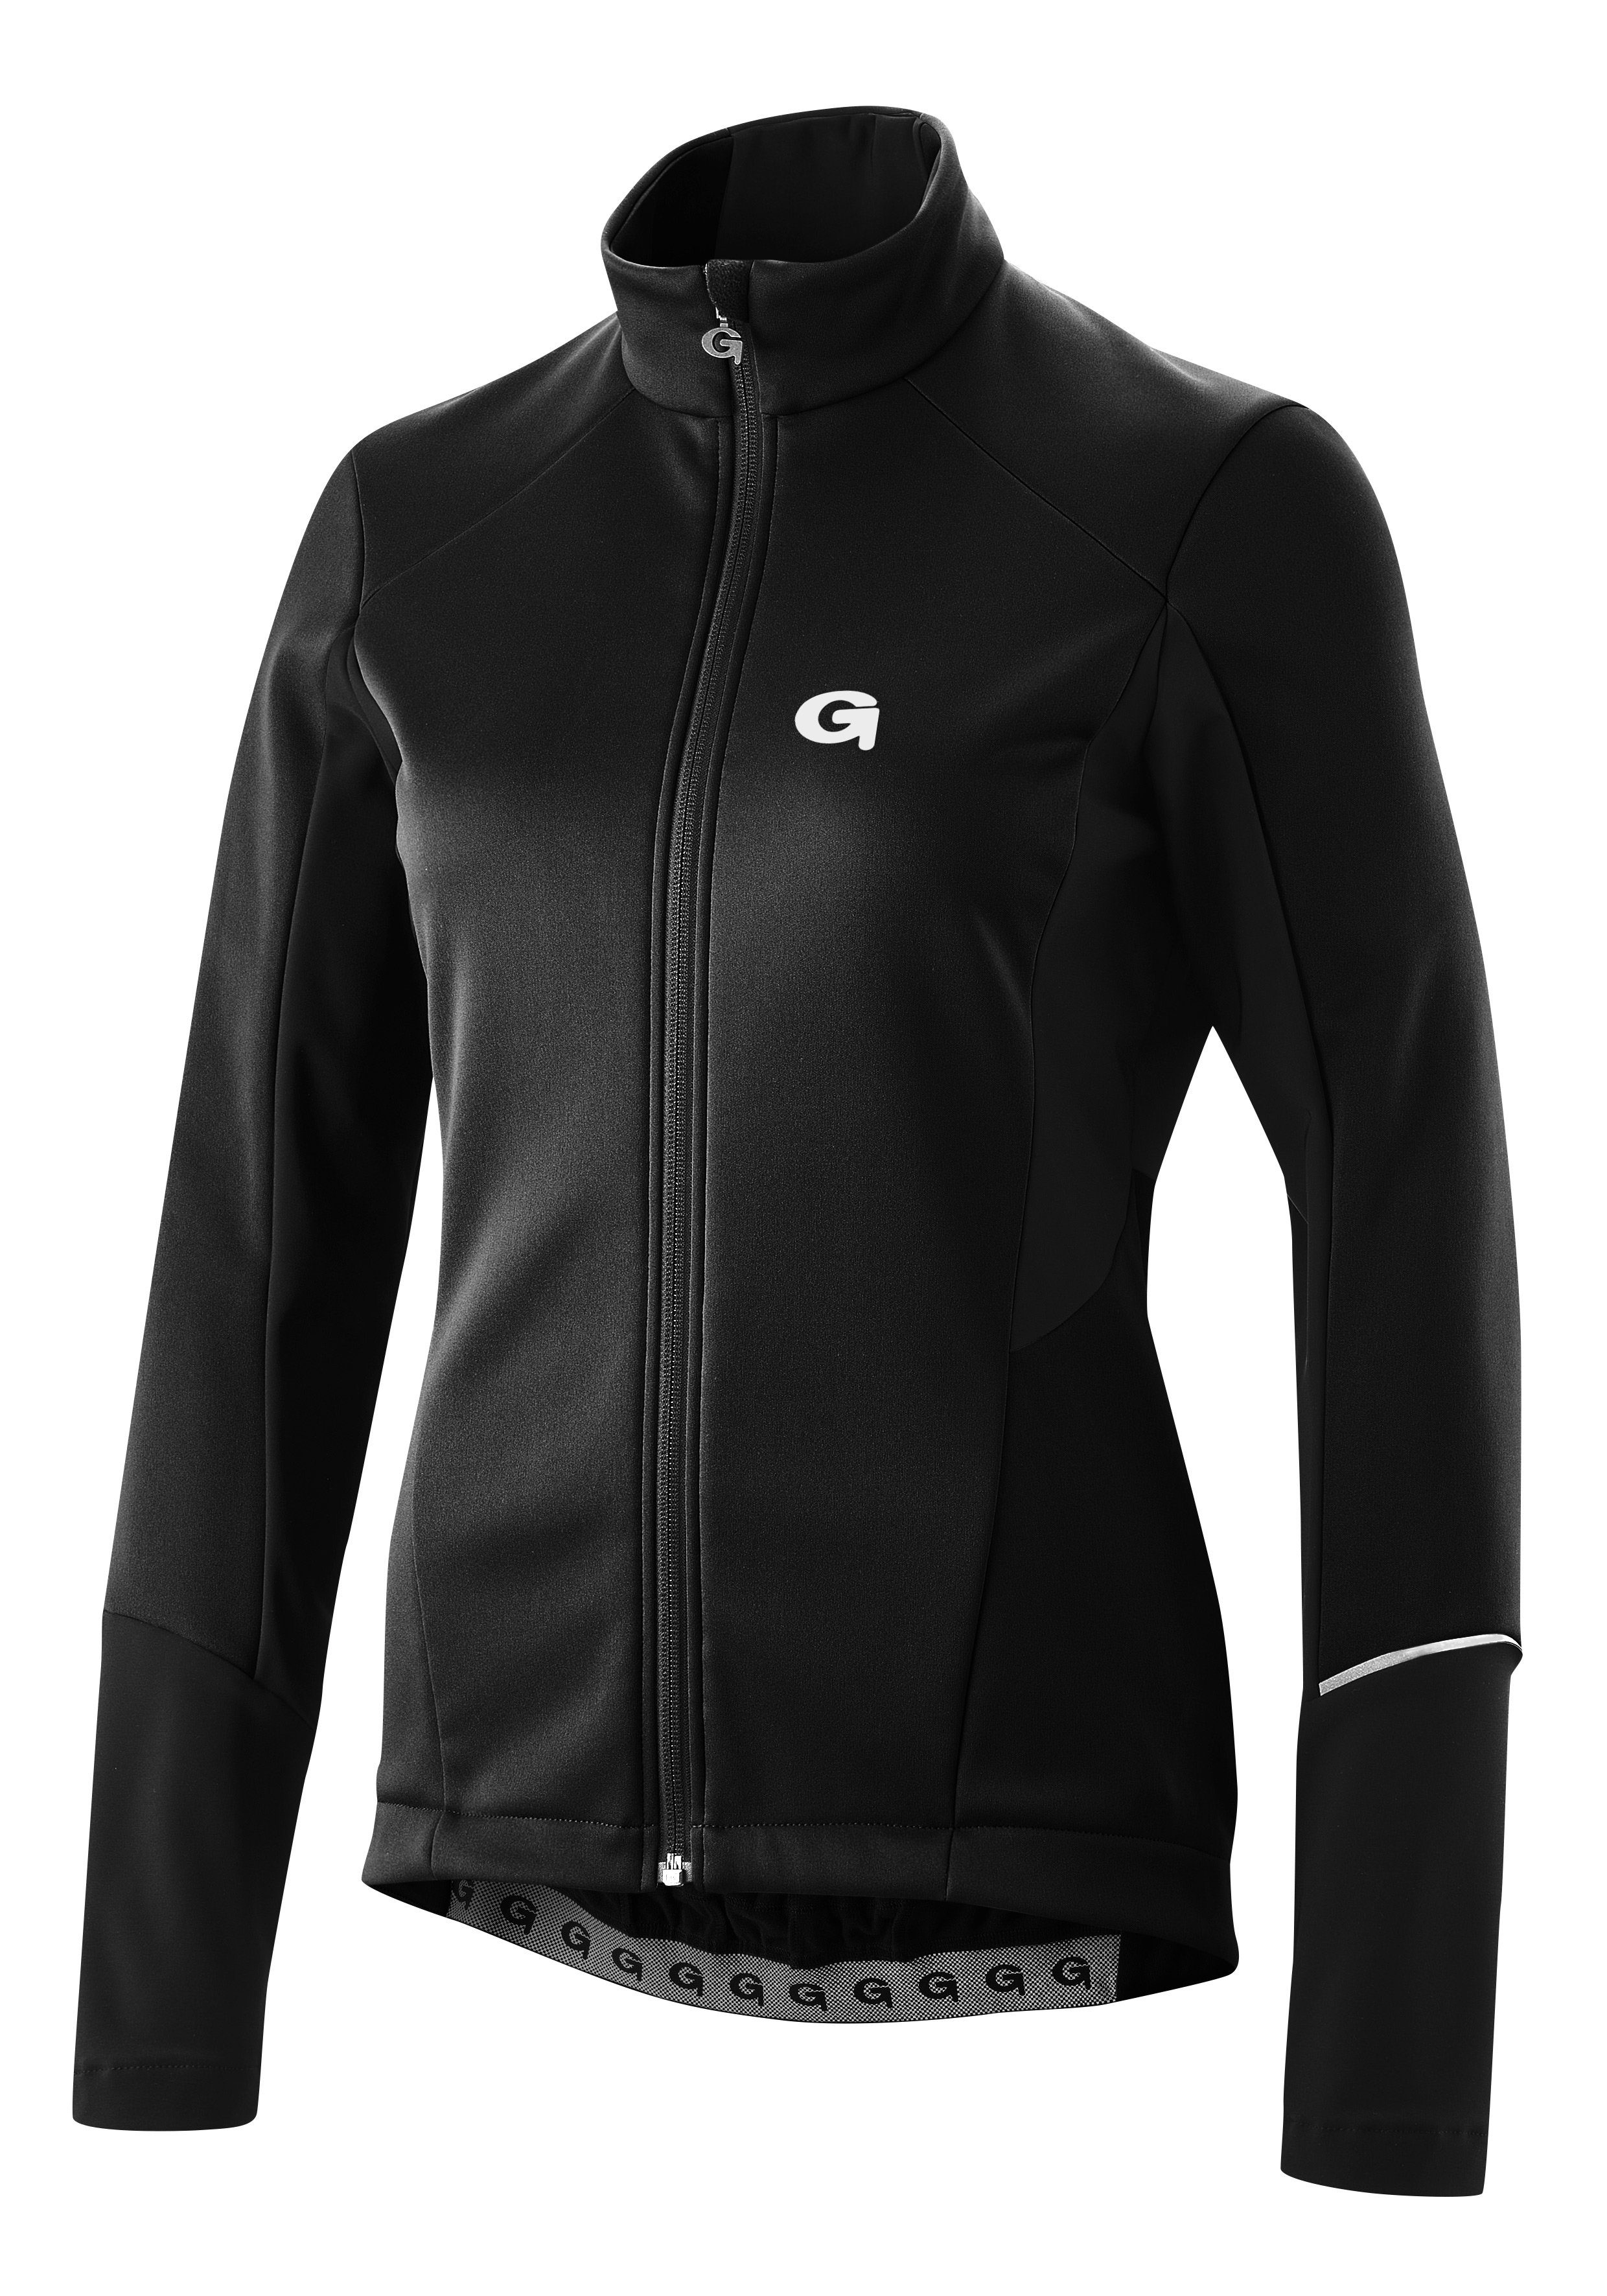 Gonso Softshell-Jacke, schwarz und FURIANI Damen atmungsaktiv Windjacke wasserabweisend Fahrradjacke